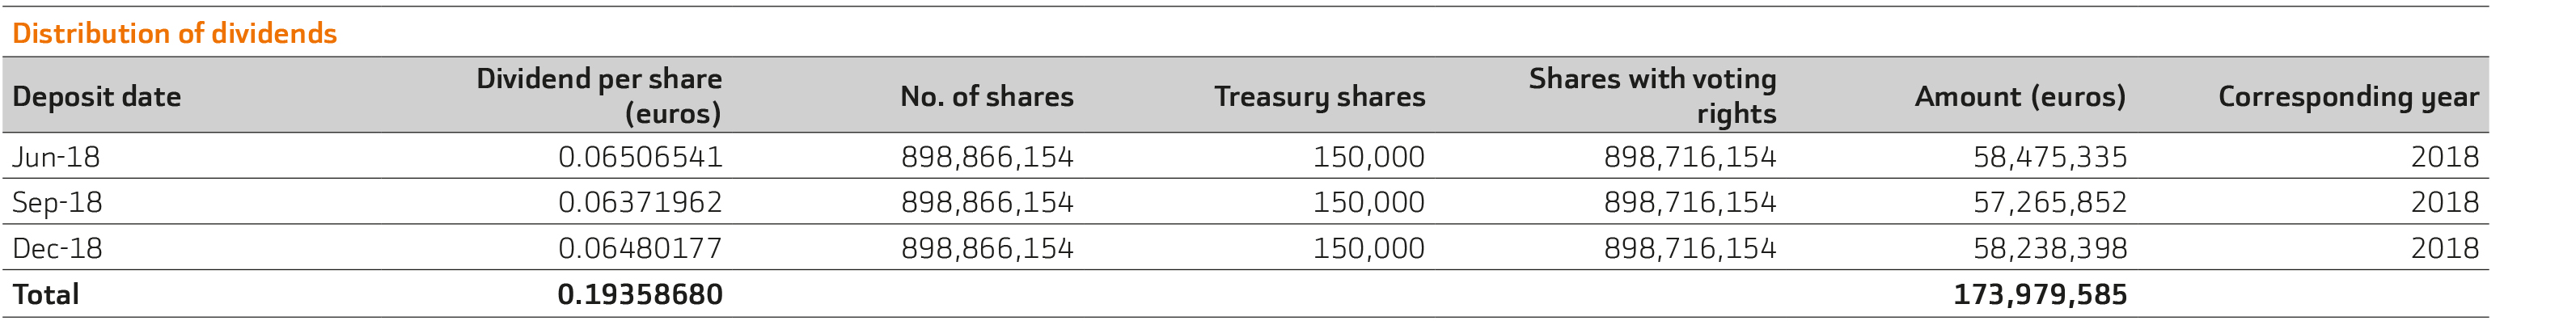 distribution of dividends